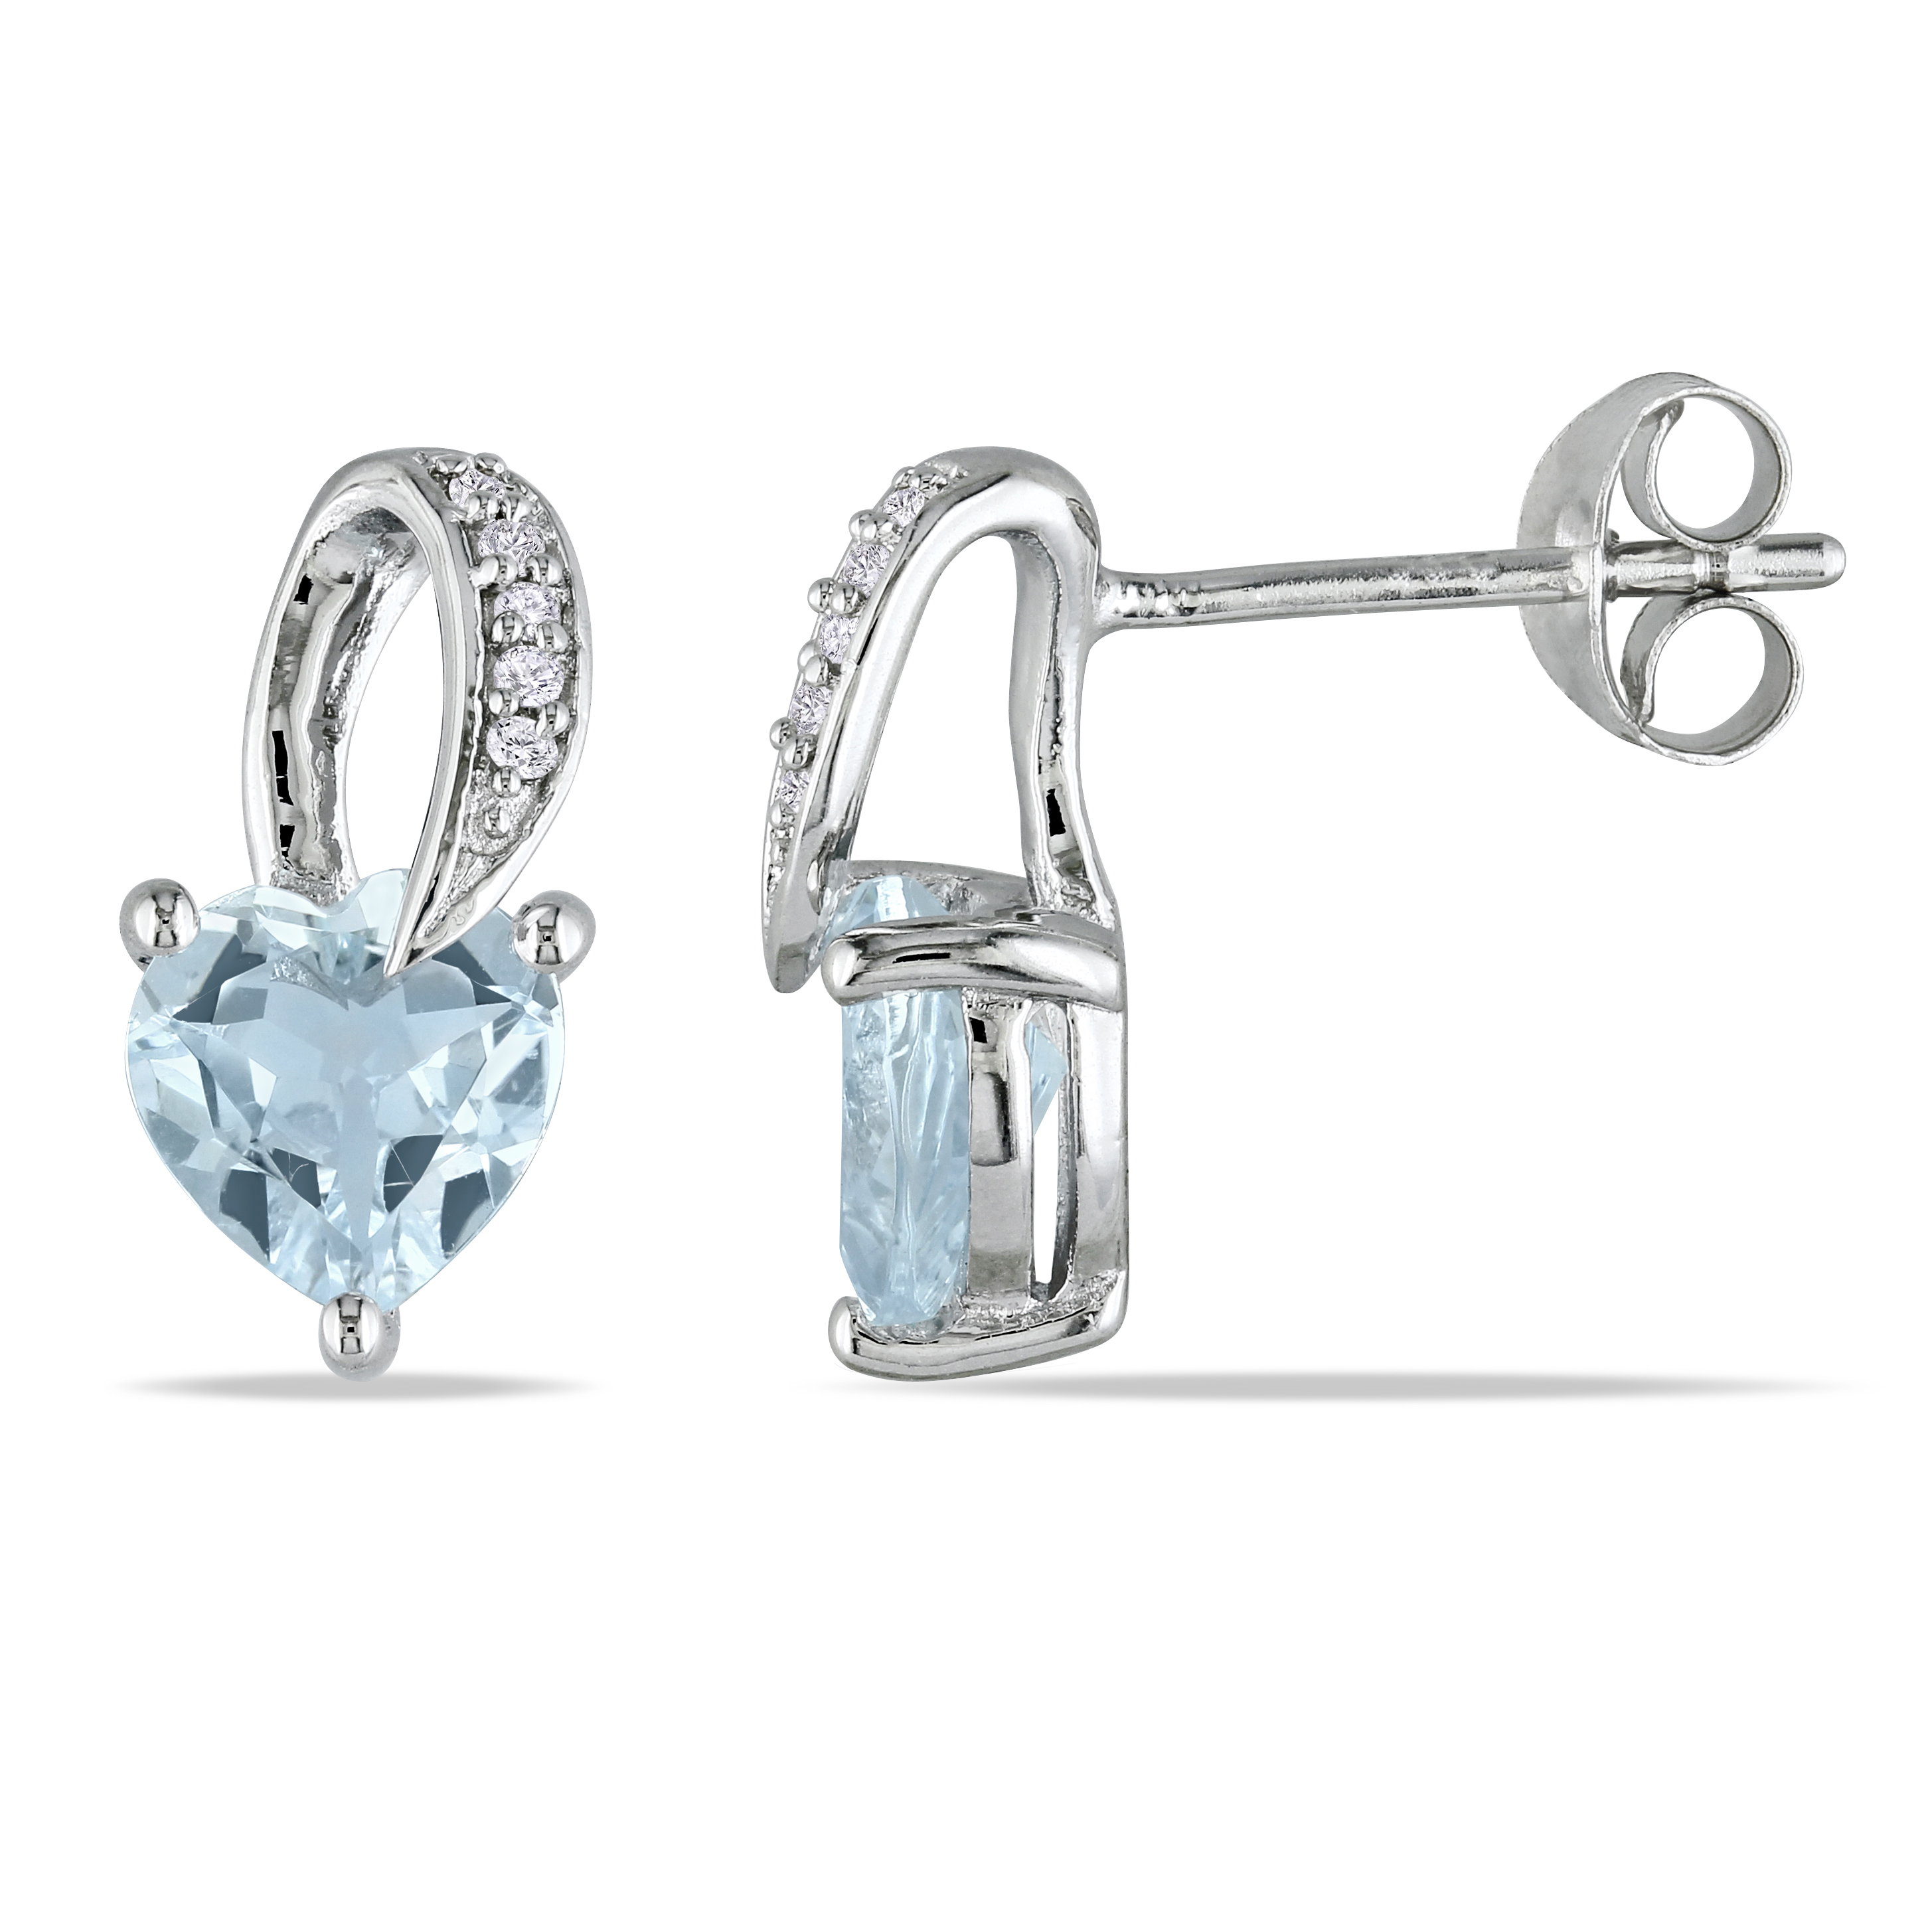 1 1/3 CT TGW Heart Shaped Aquamarine and Diamond Swirl Earrings in Sterling Silver